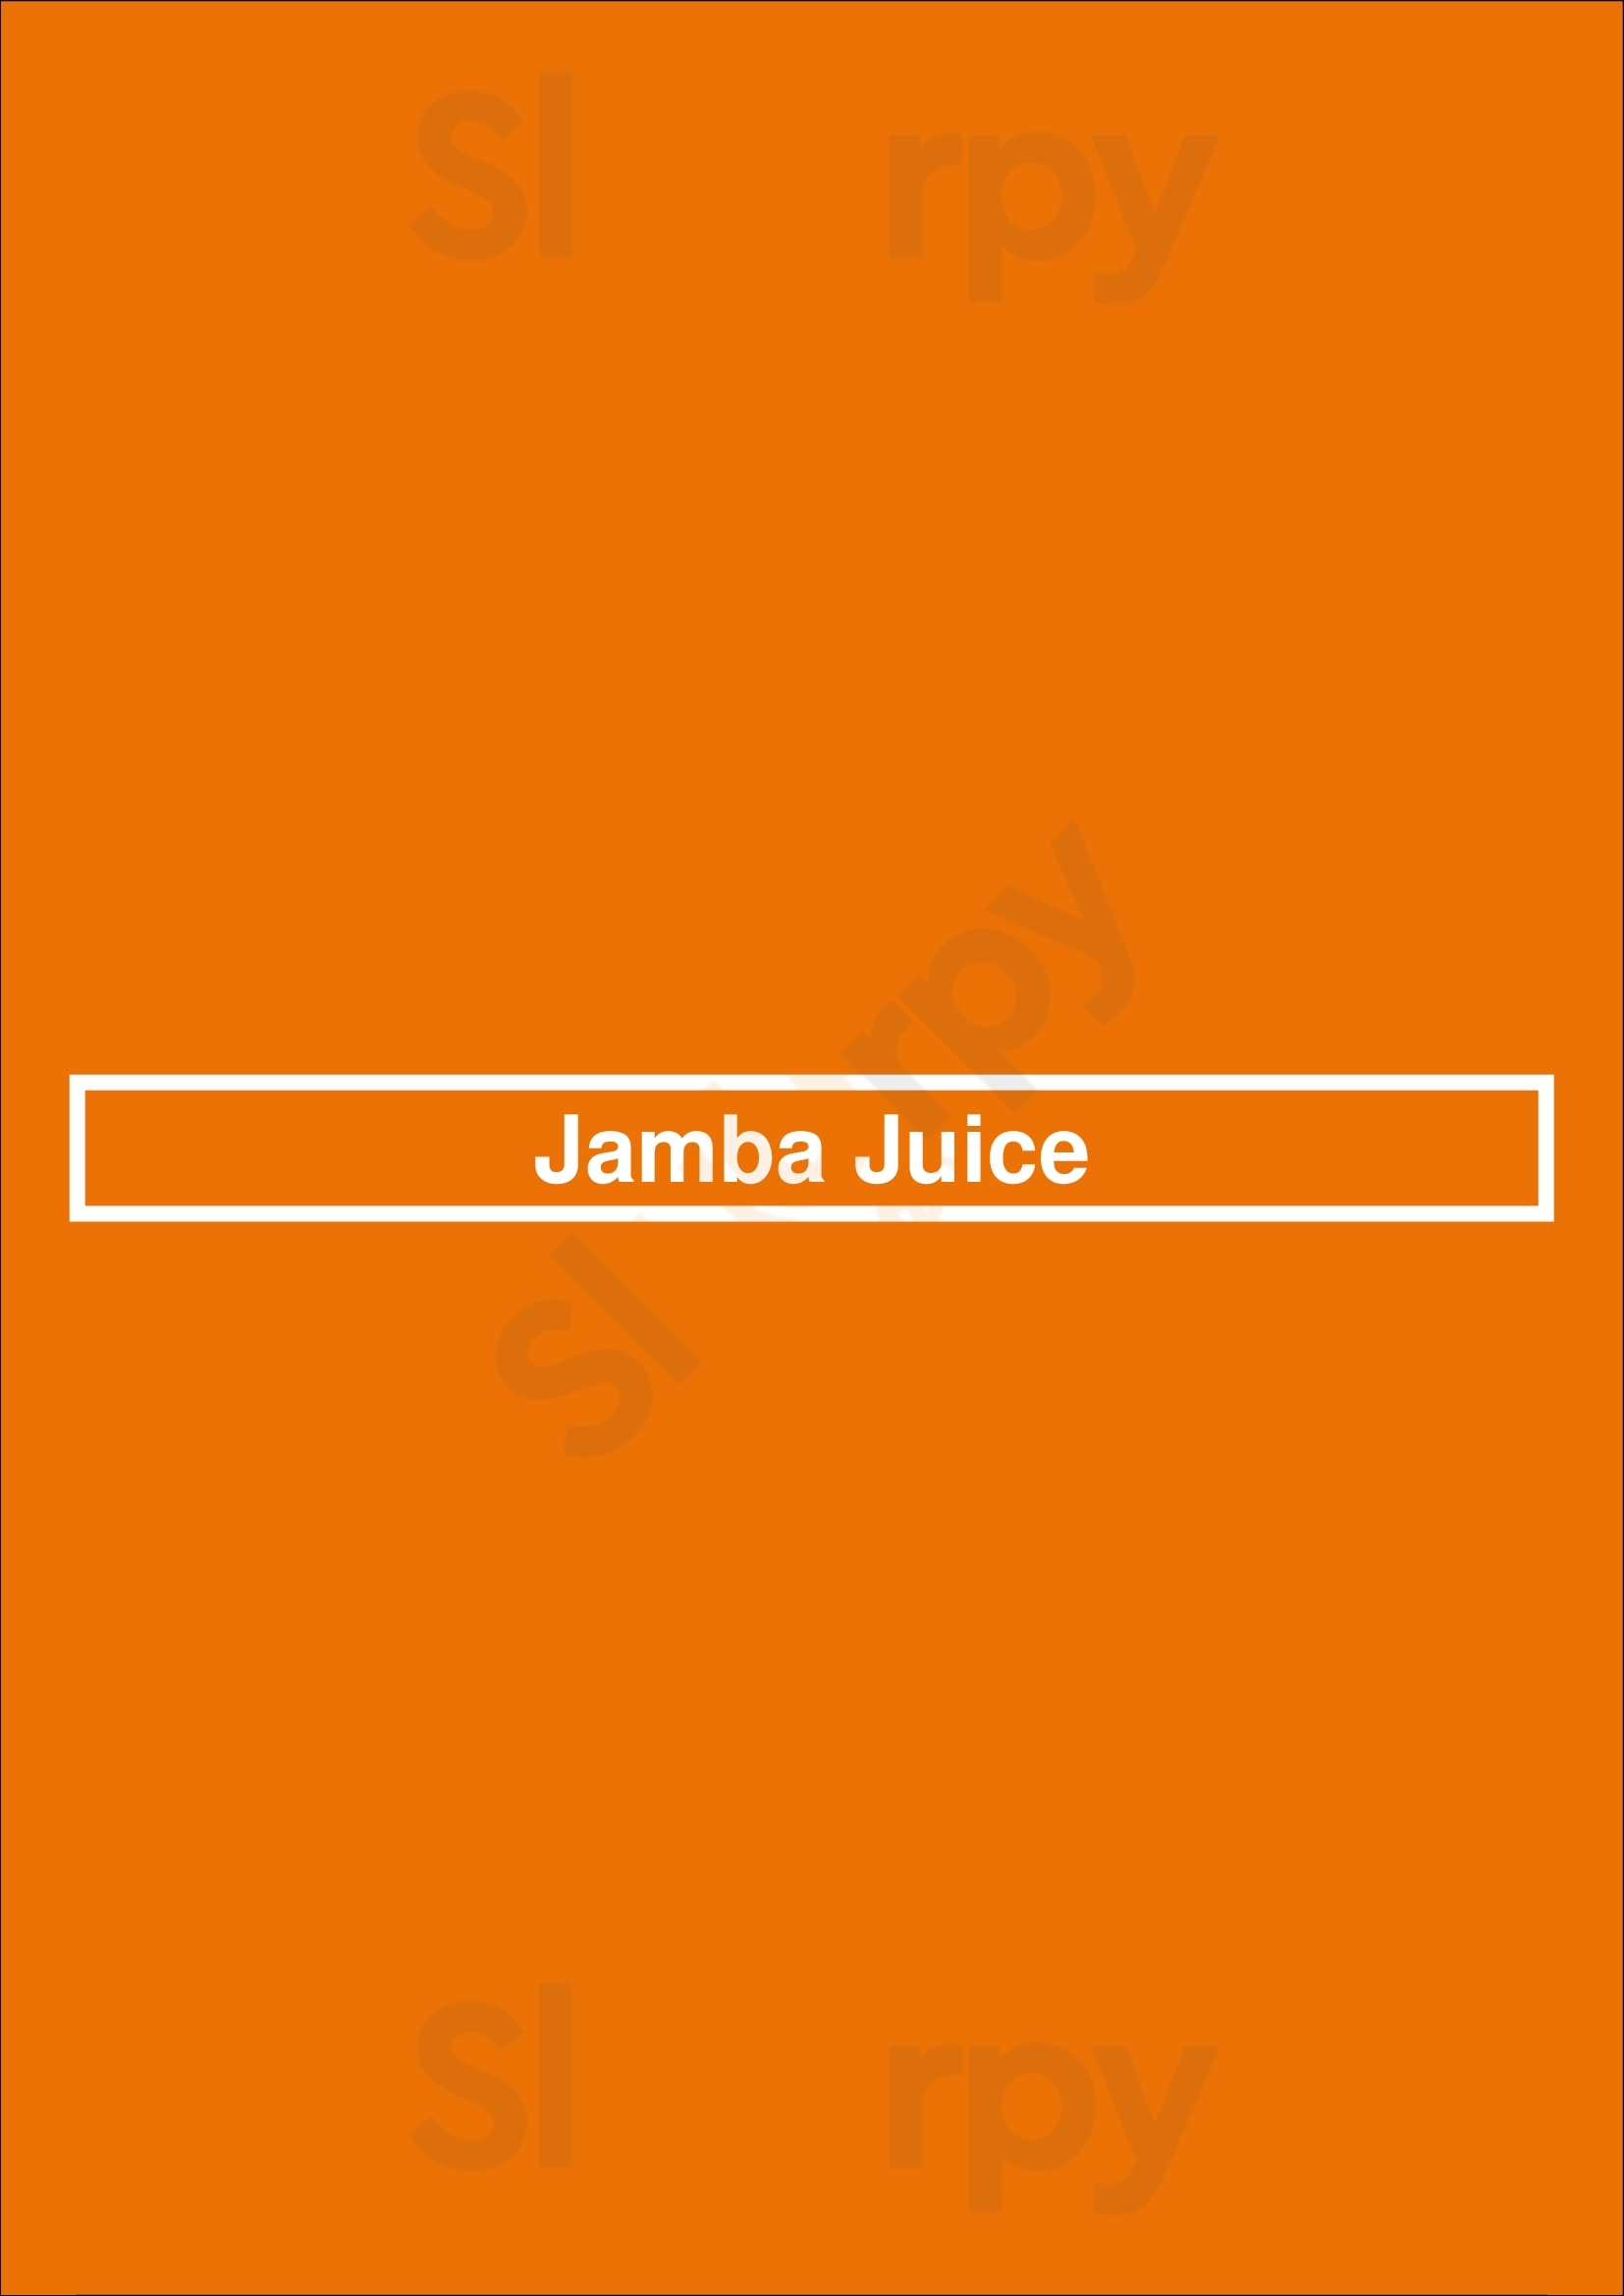 Jamba Juice La Jolla Menu - 1